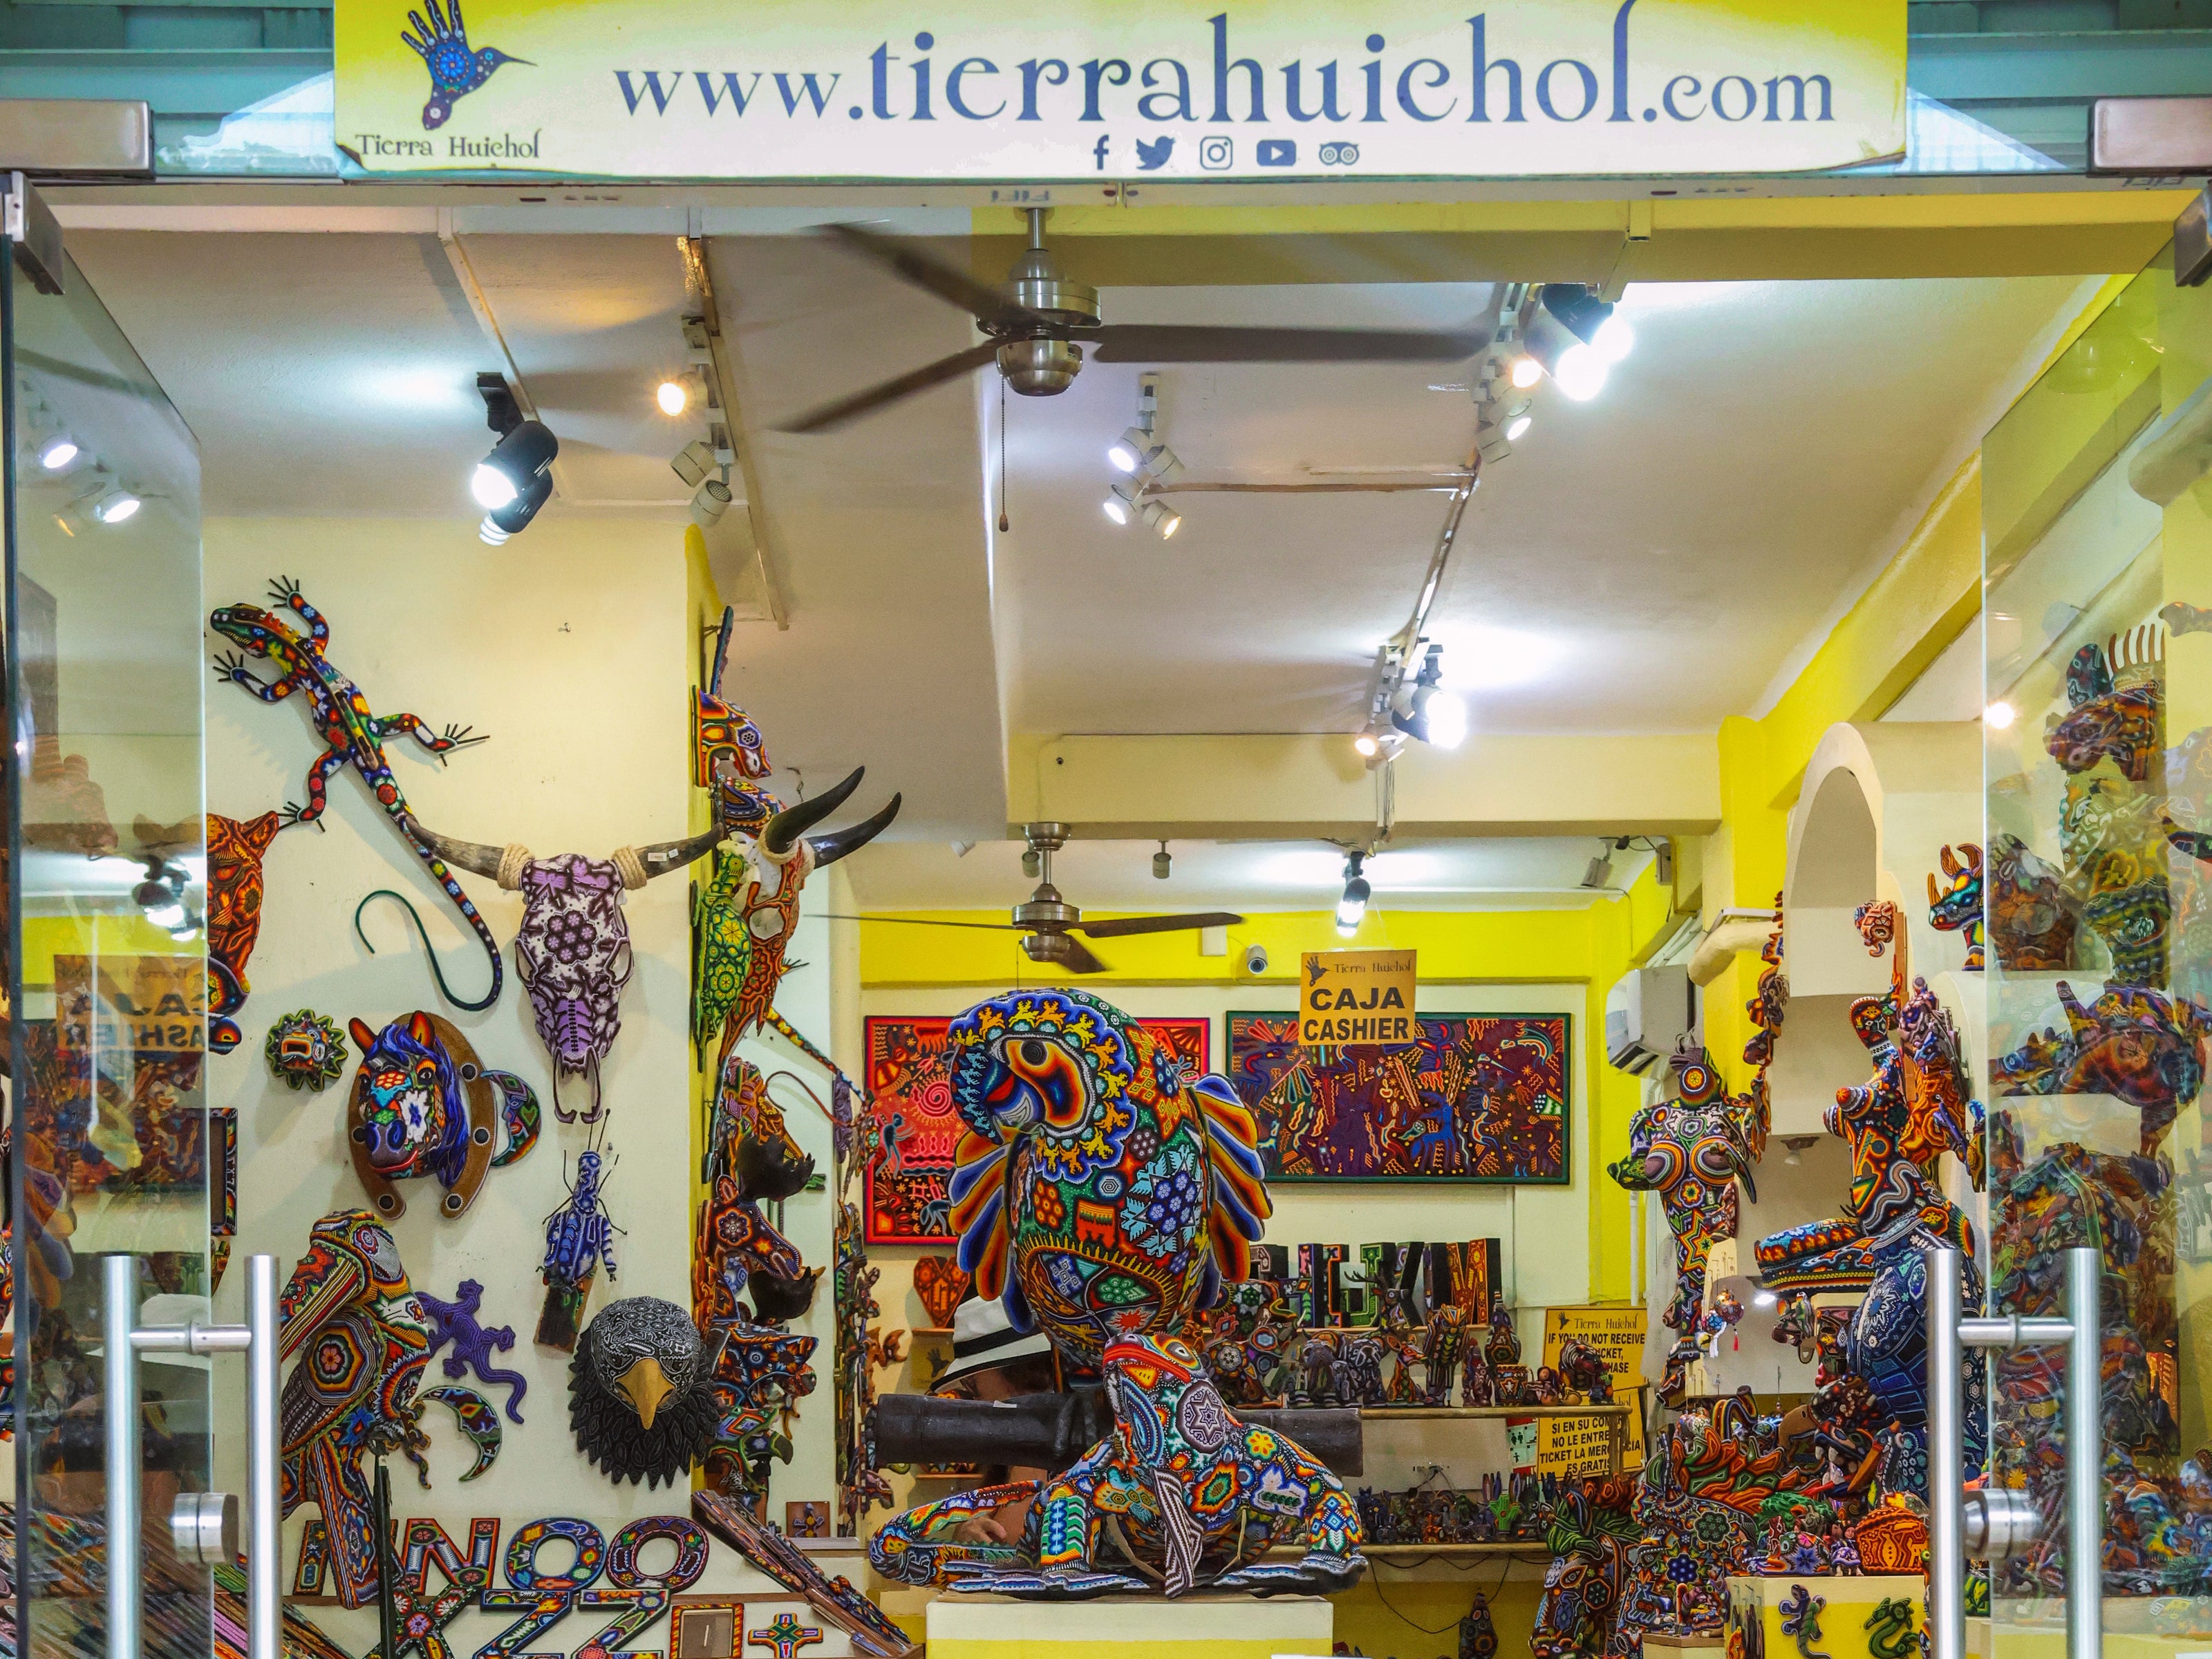 sucursal Galeria de arte tierra huichol puerto vallarta zona romantica Jalisco Mexico